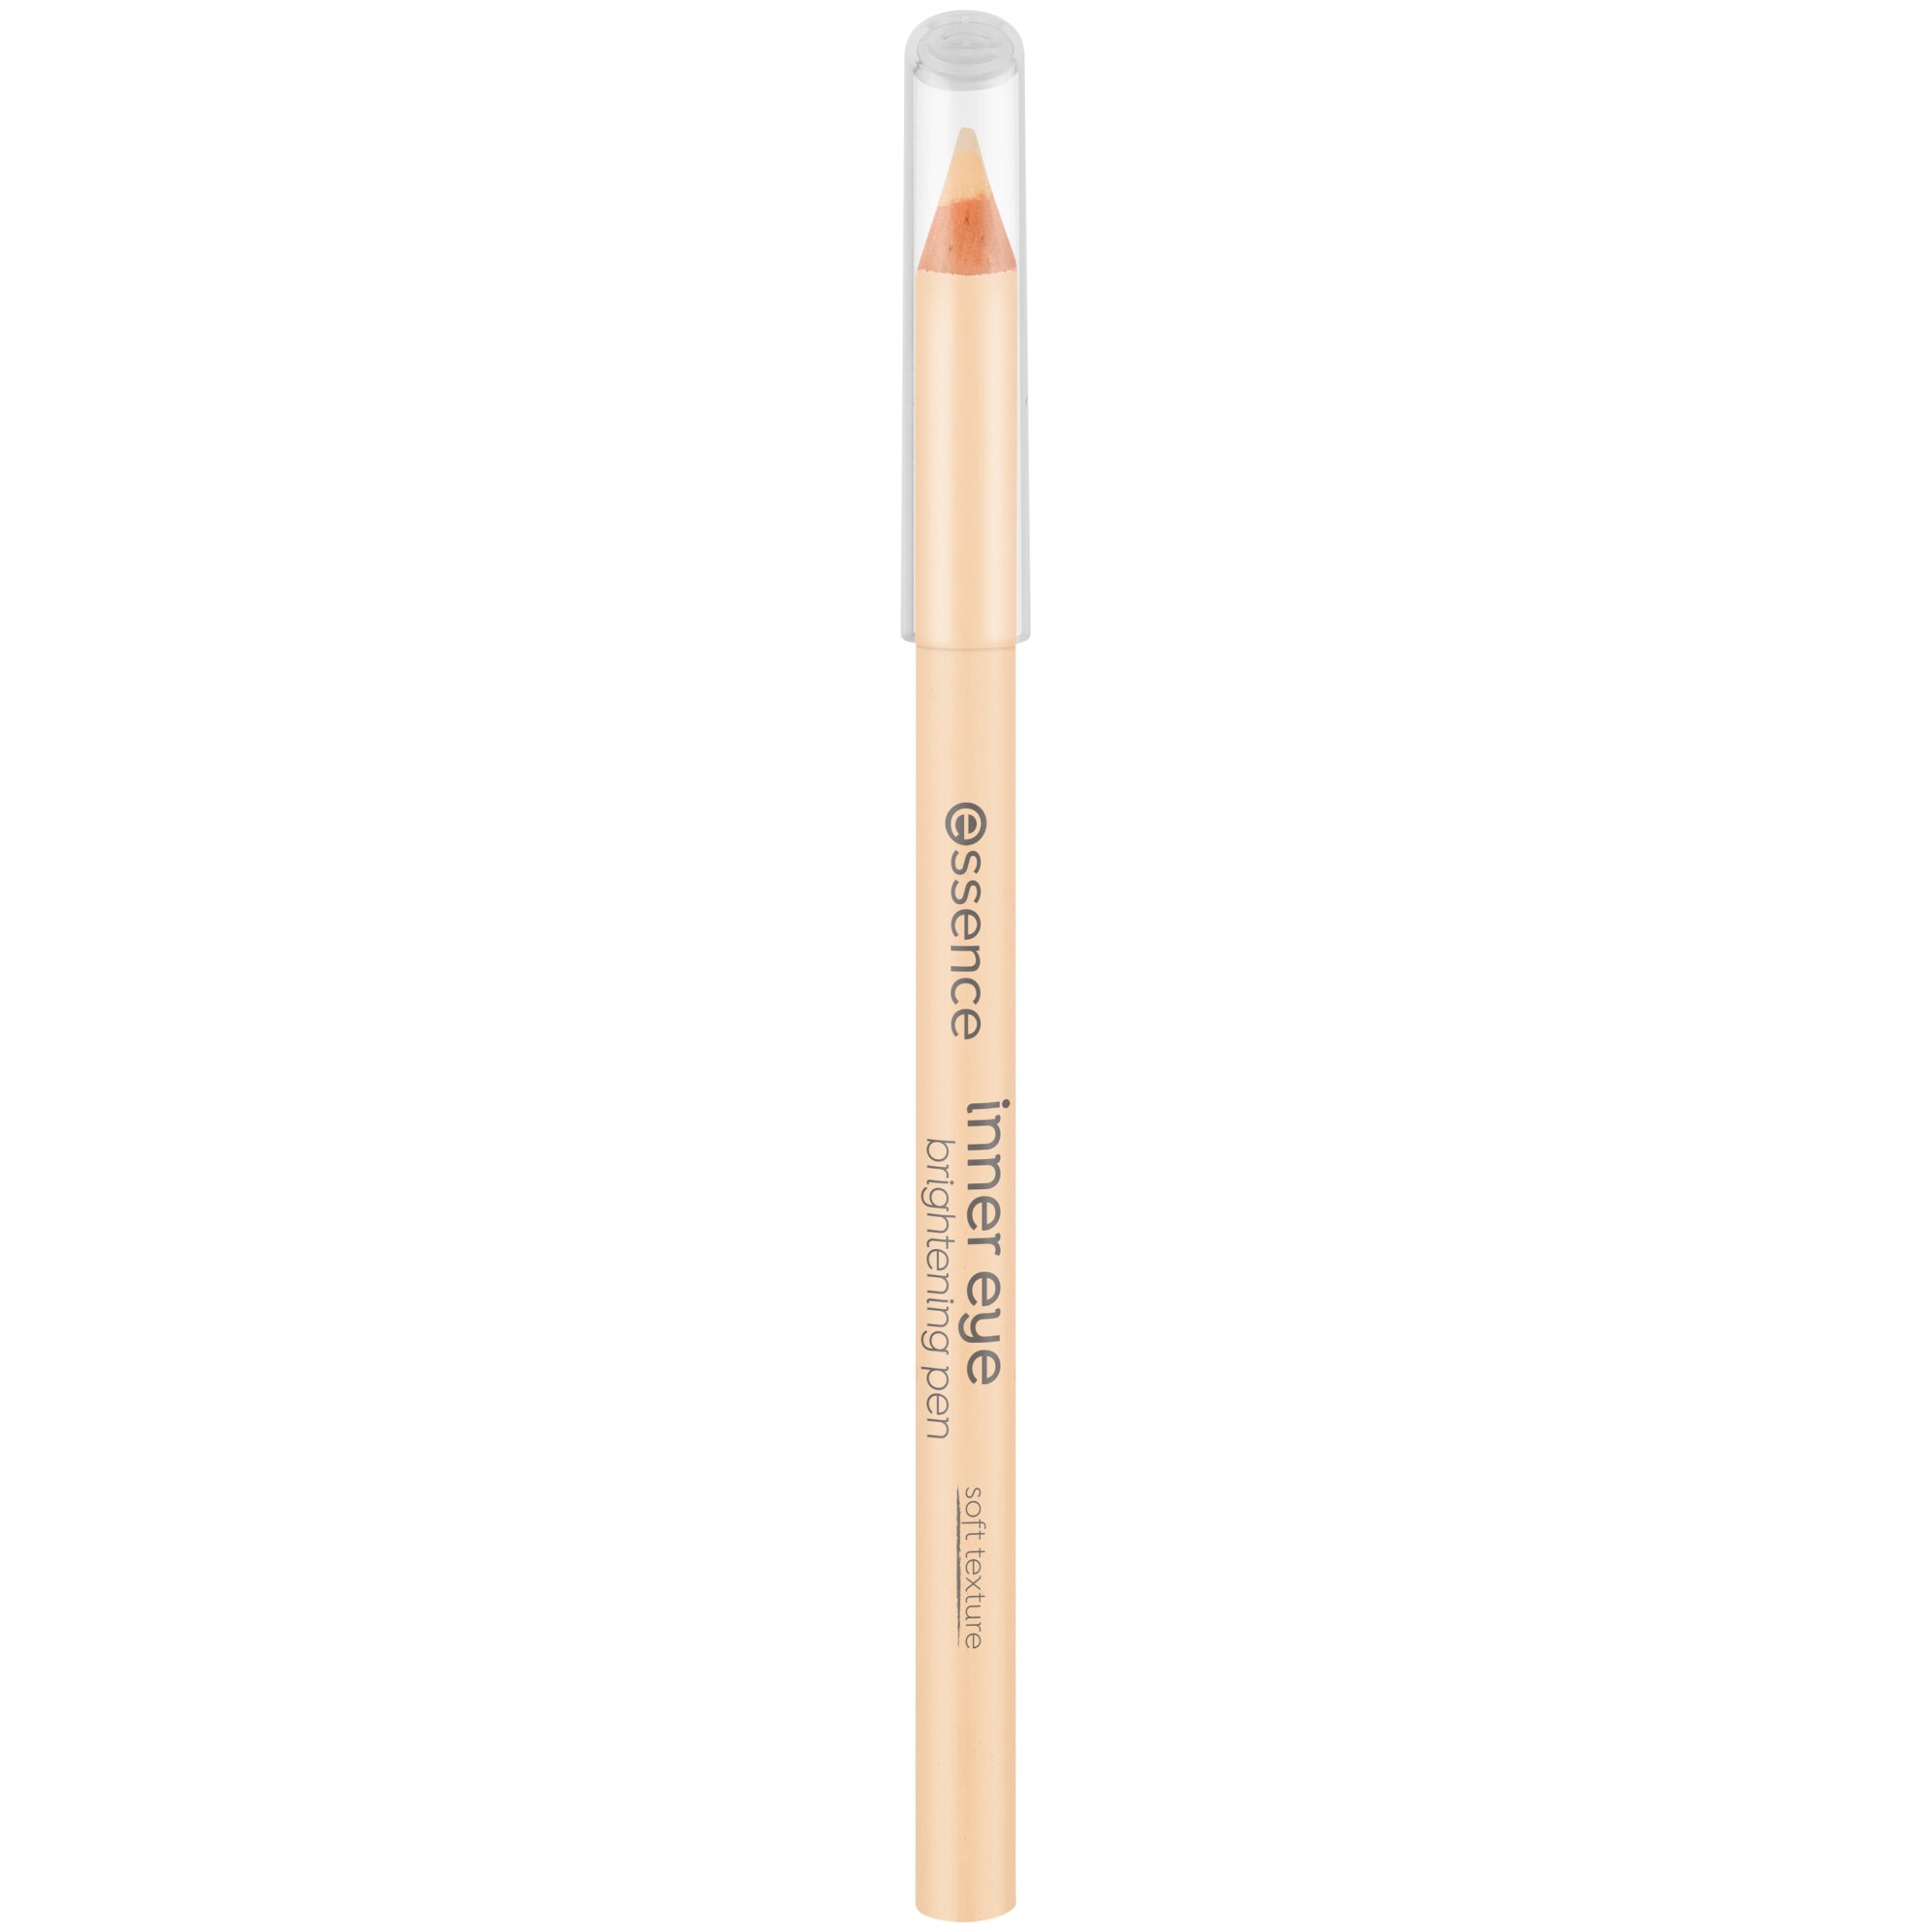 Creion pentru ochi iluminator Inner Eye Brightening Pen, 01 - Everybody's Shade, 1.02 g, Essence